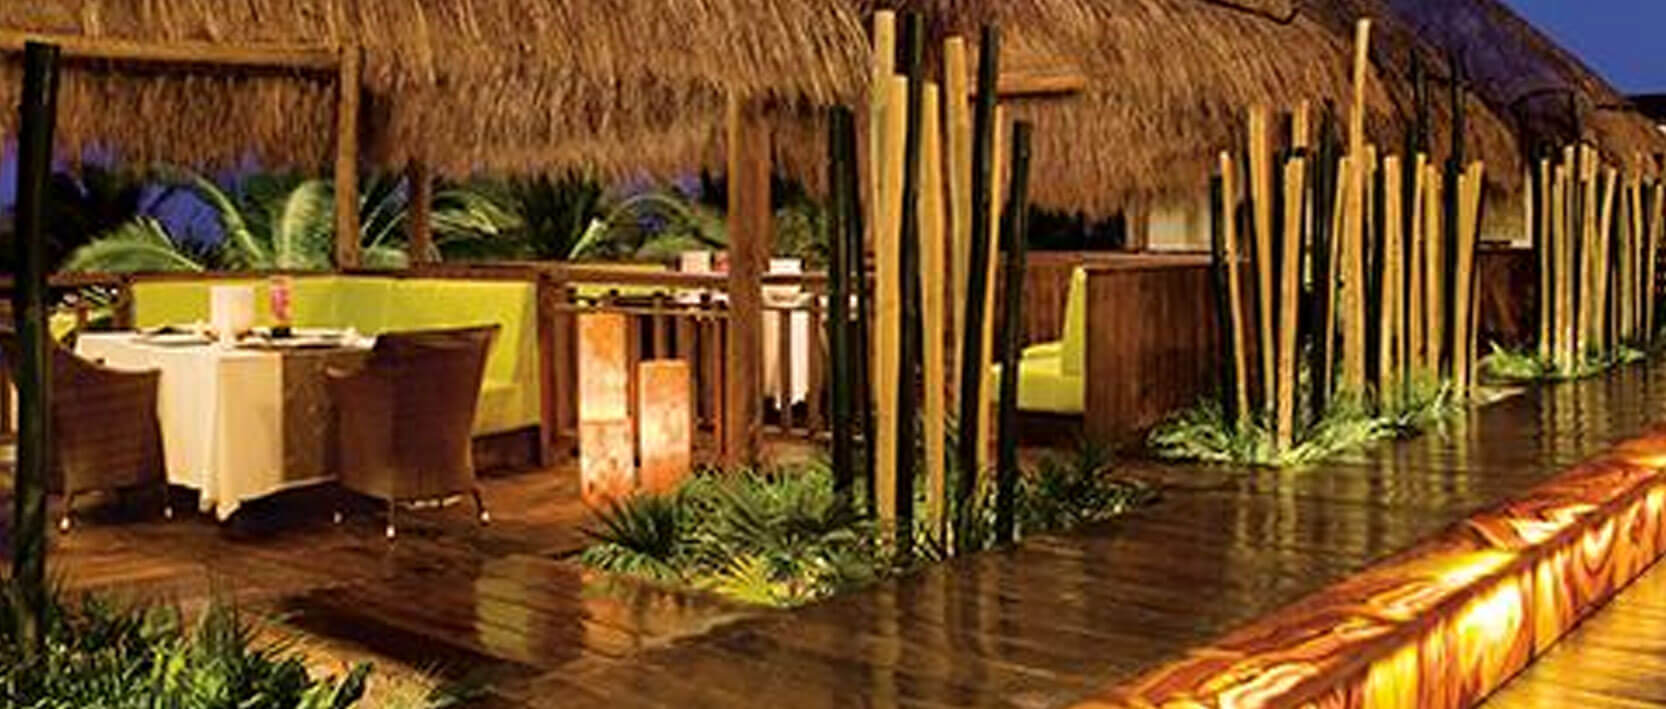 Dreams Puerto Aventuras Resort Restaurants and Bars - Gohan